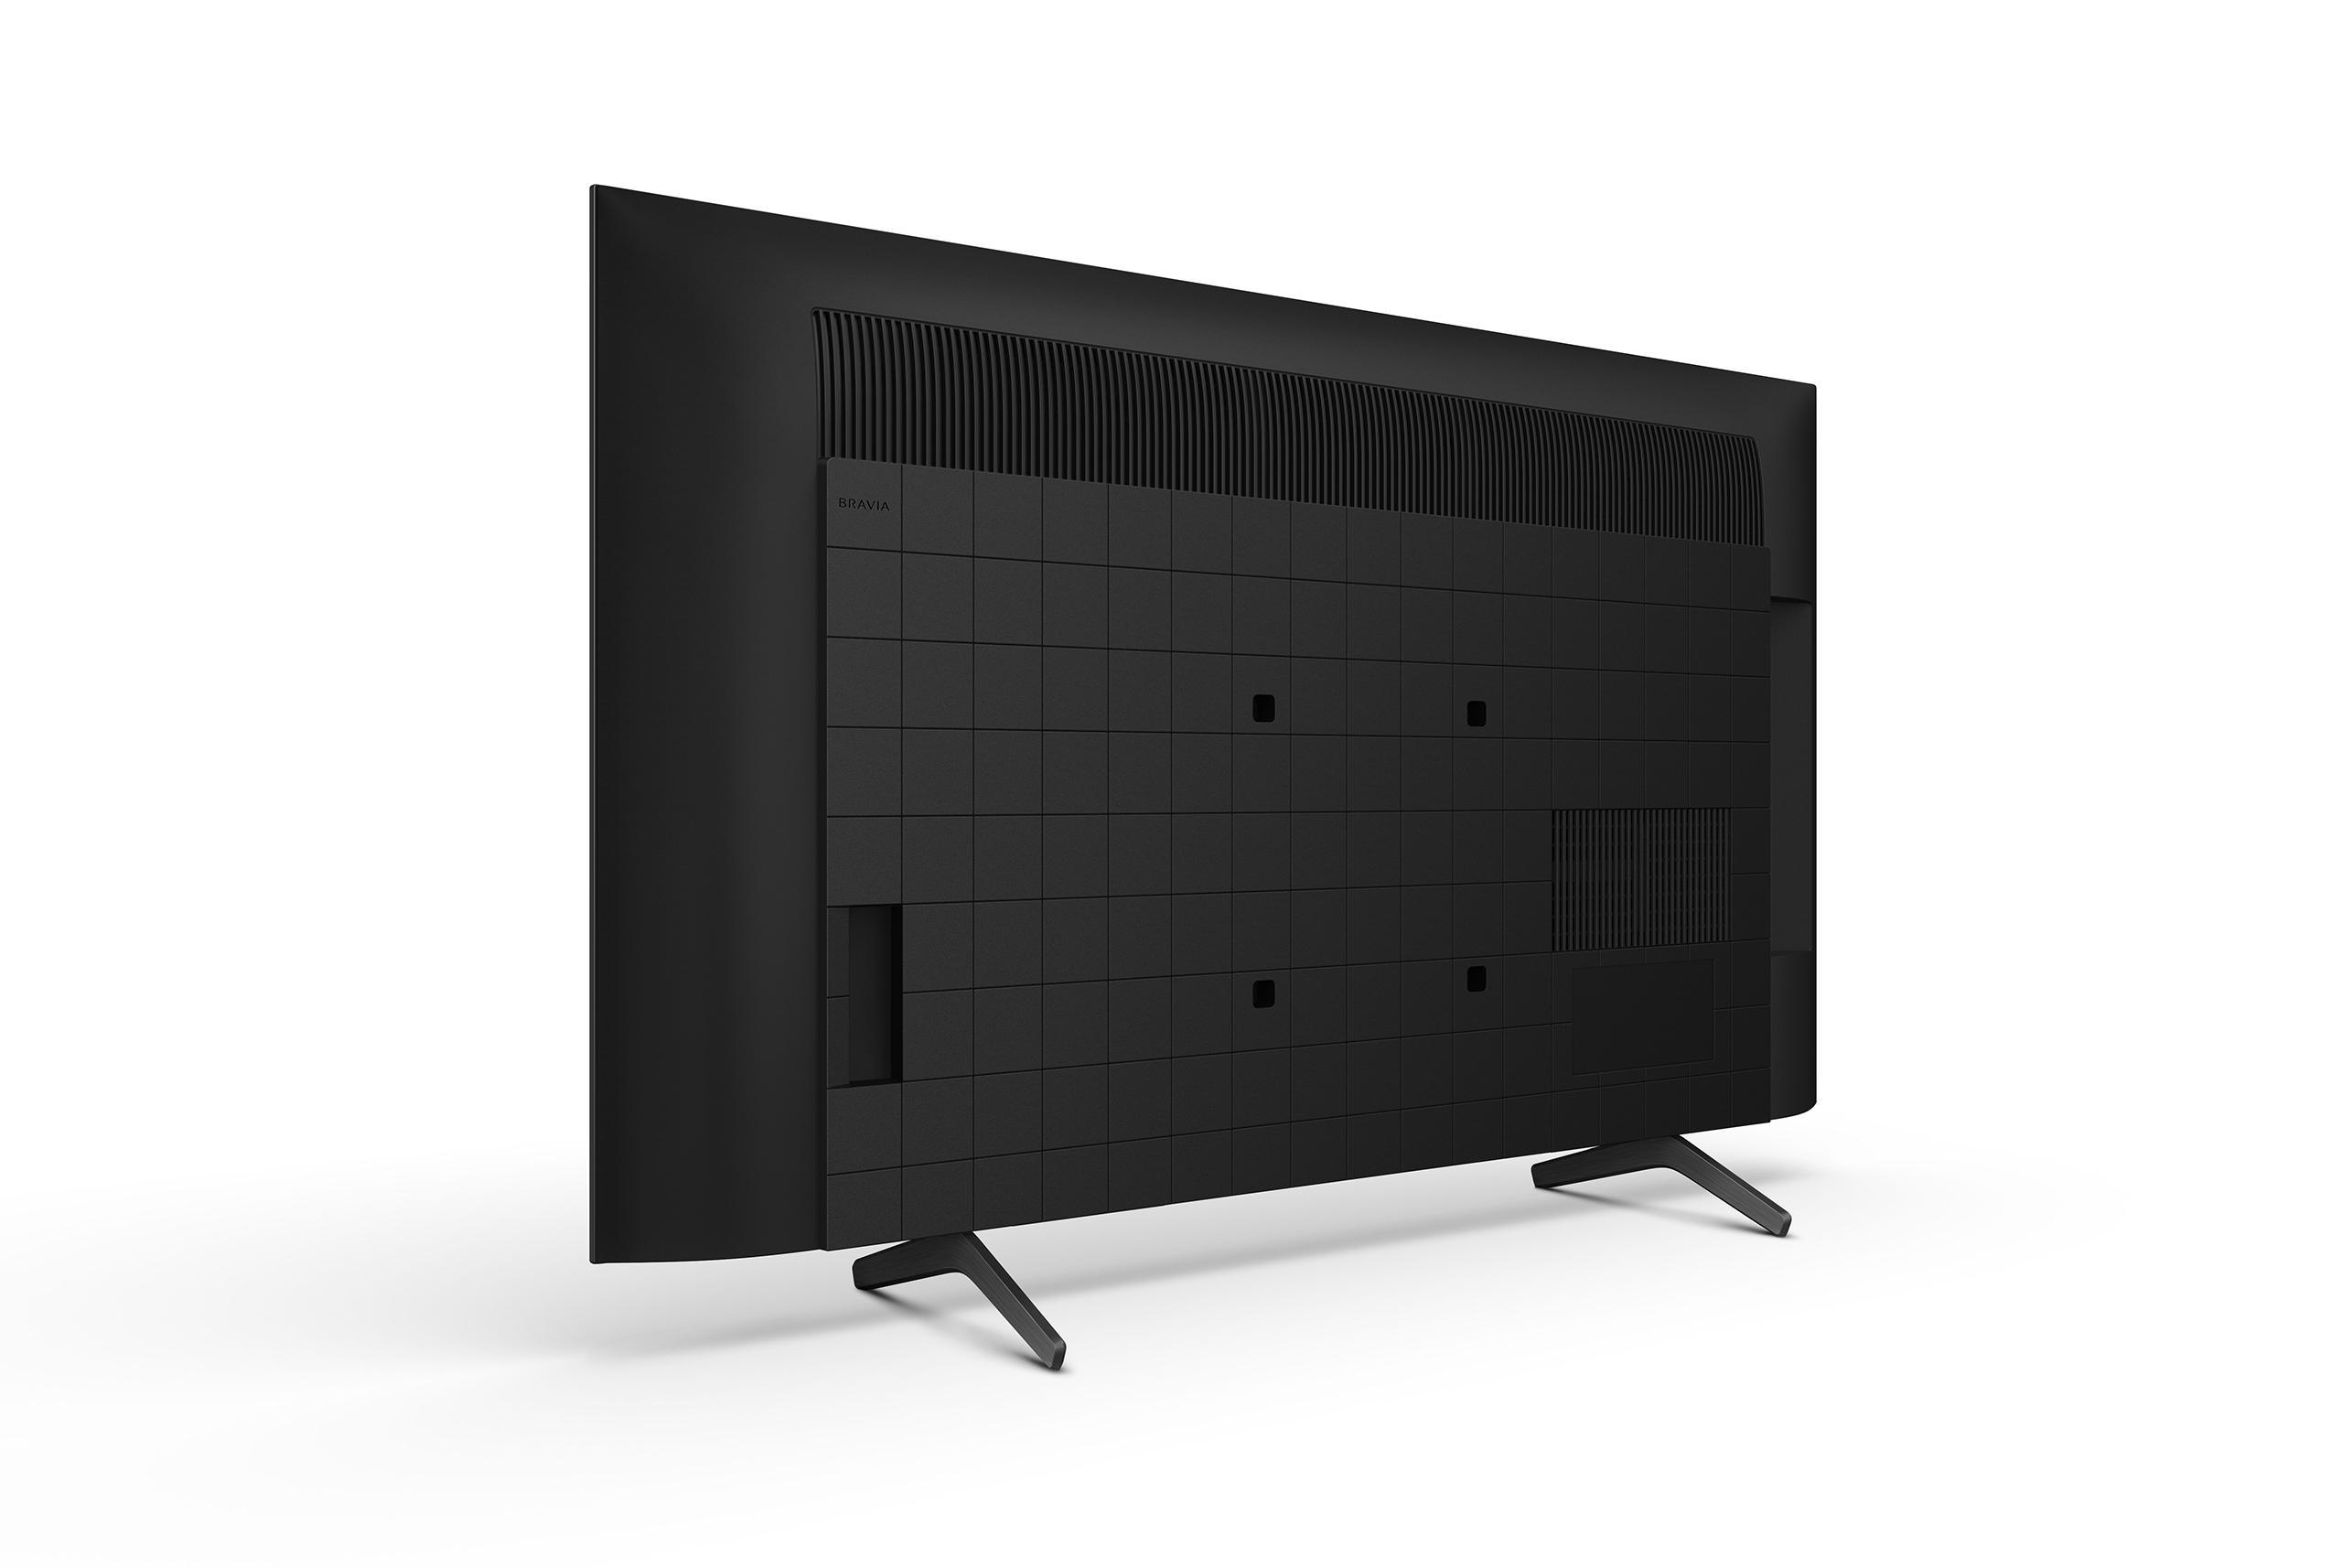 SMART TV) KD-43X85J 108 cm, TV Zoll Google UHD 4K, TV, SONY 43 (Flat, LED /